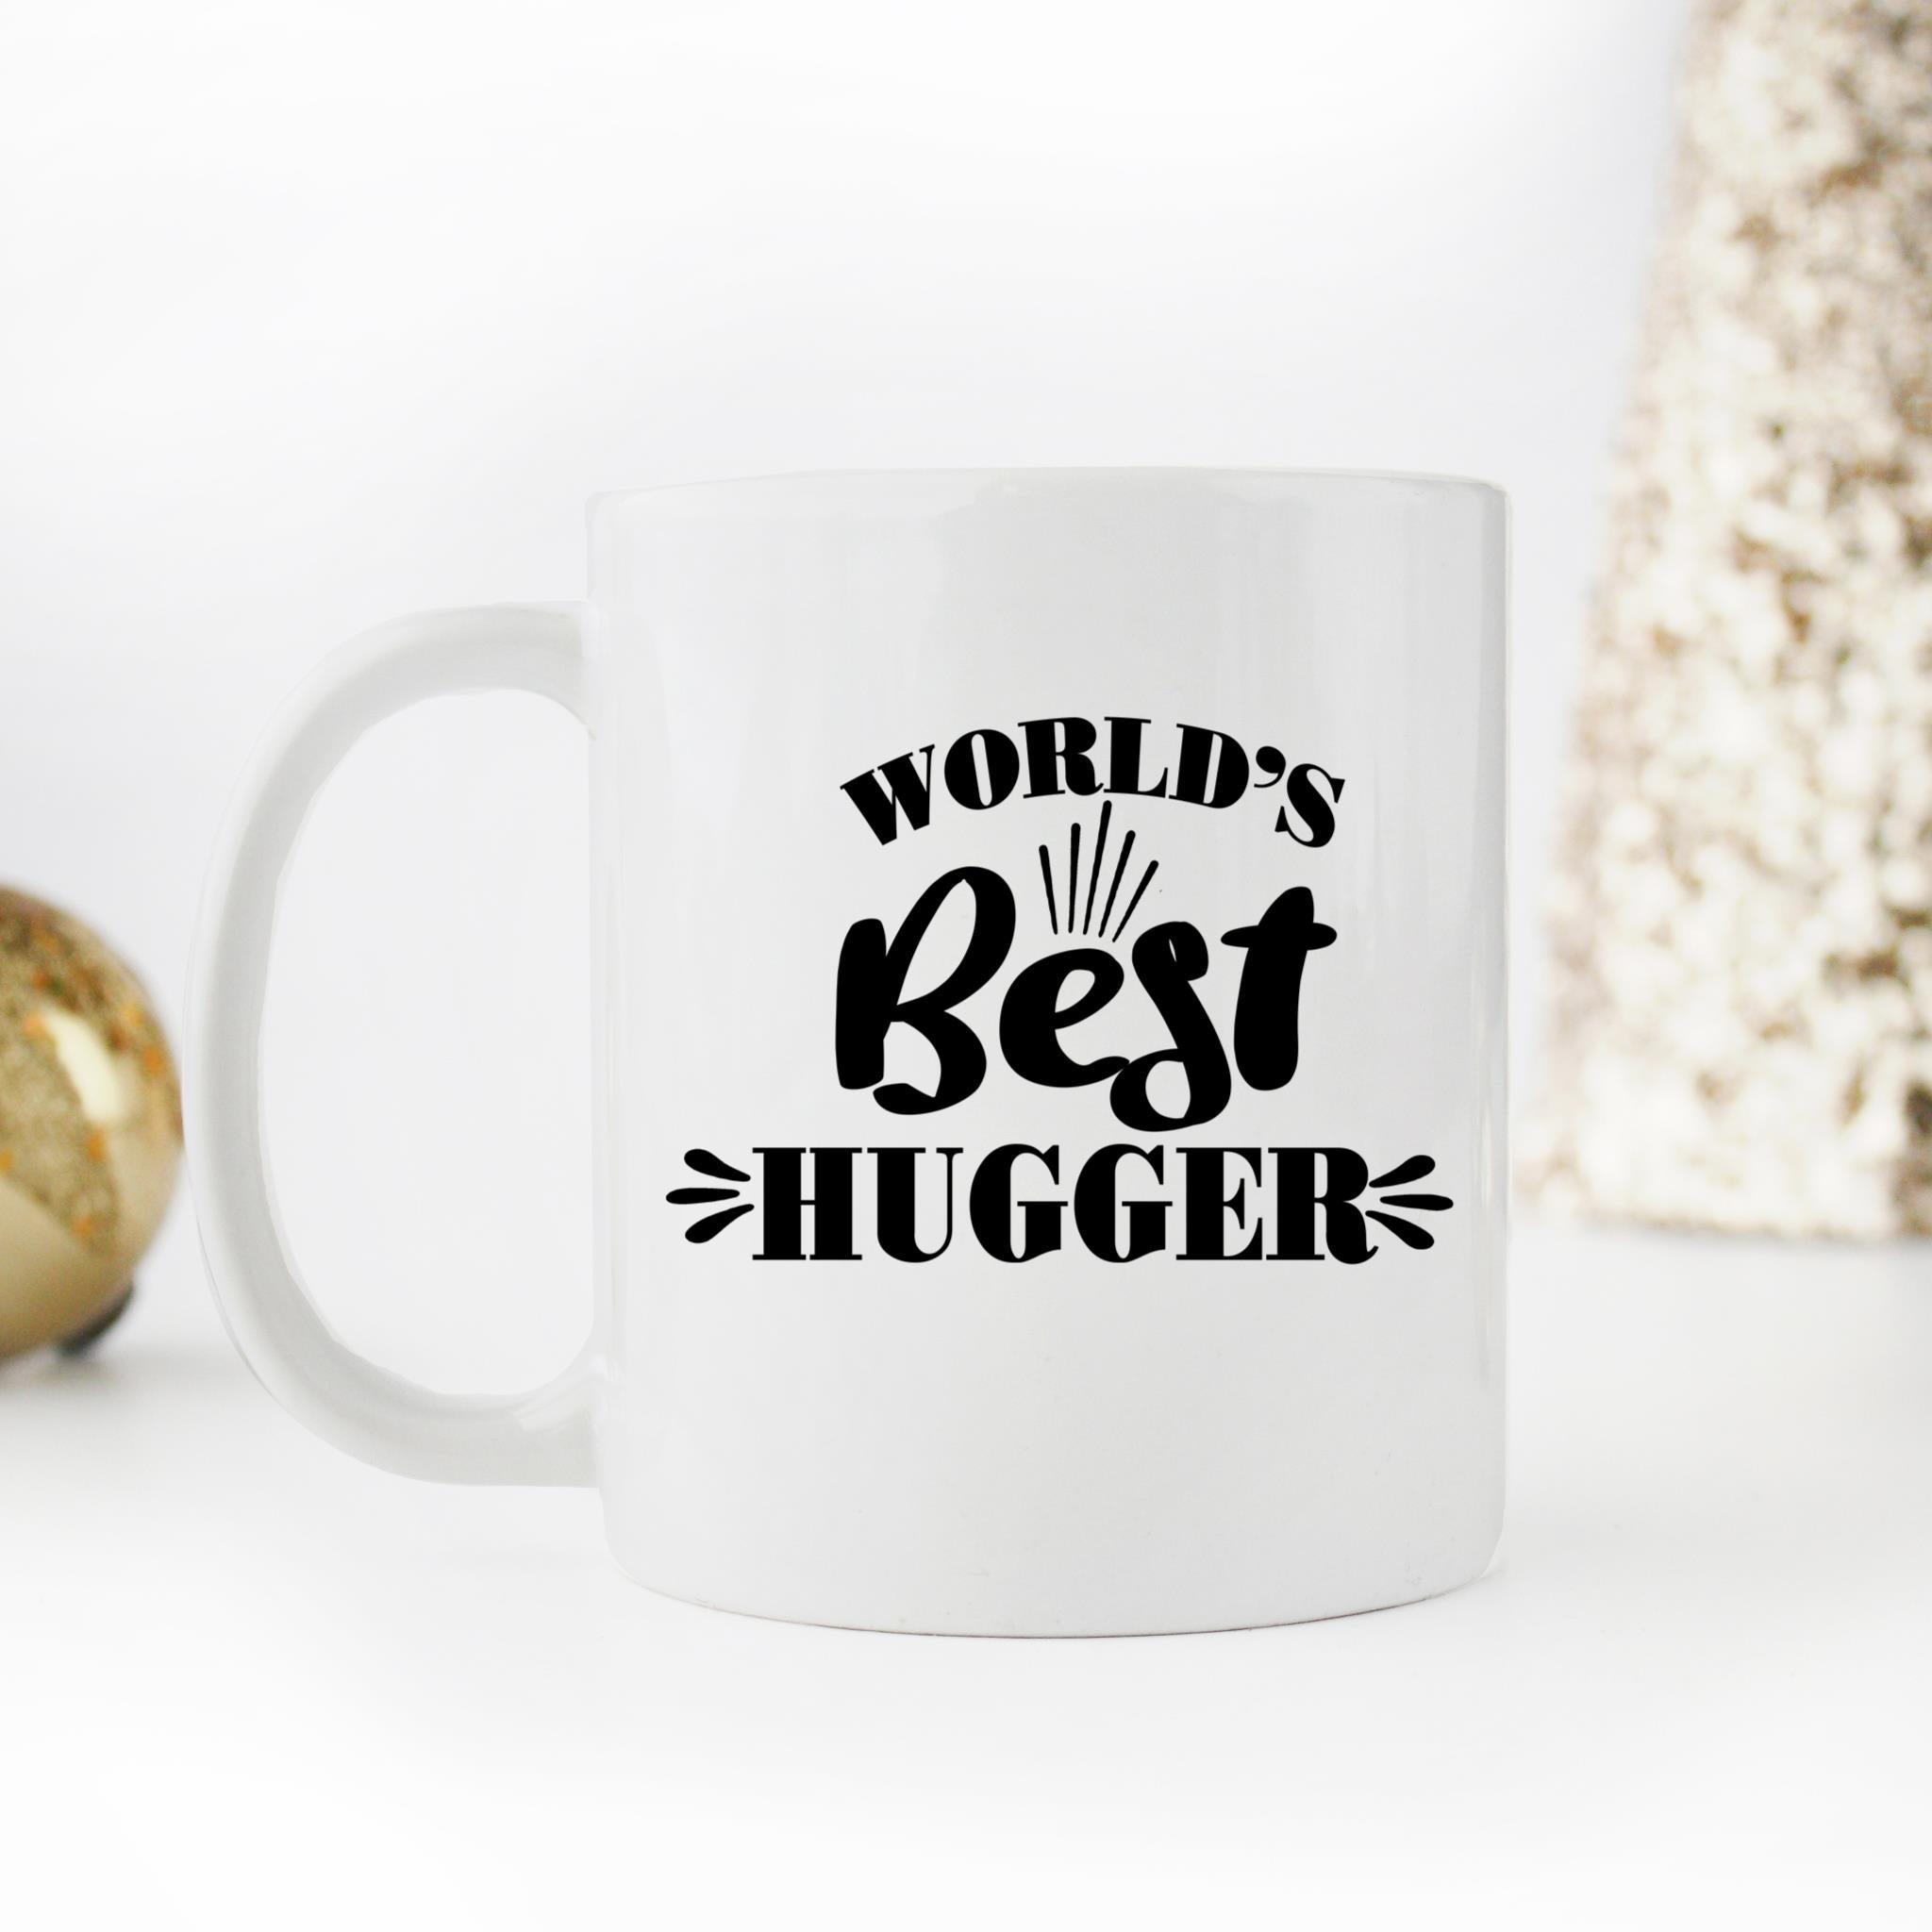 Skitongifts Coffee Mug Funny Ceramic Novelty World's Best Hugger dBybVb7